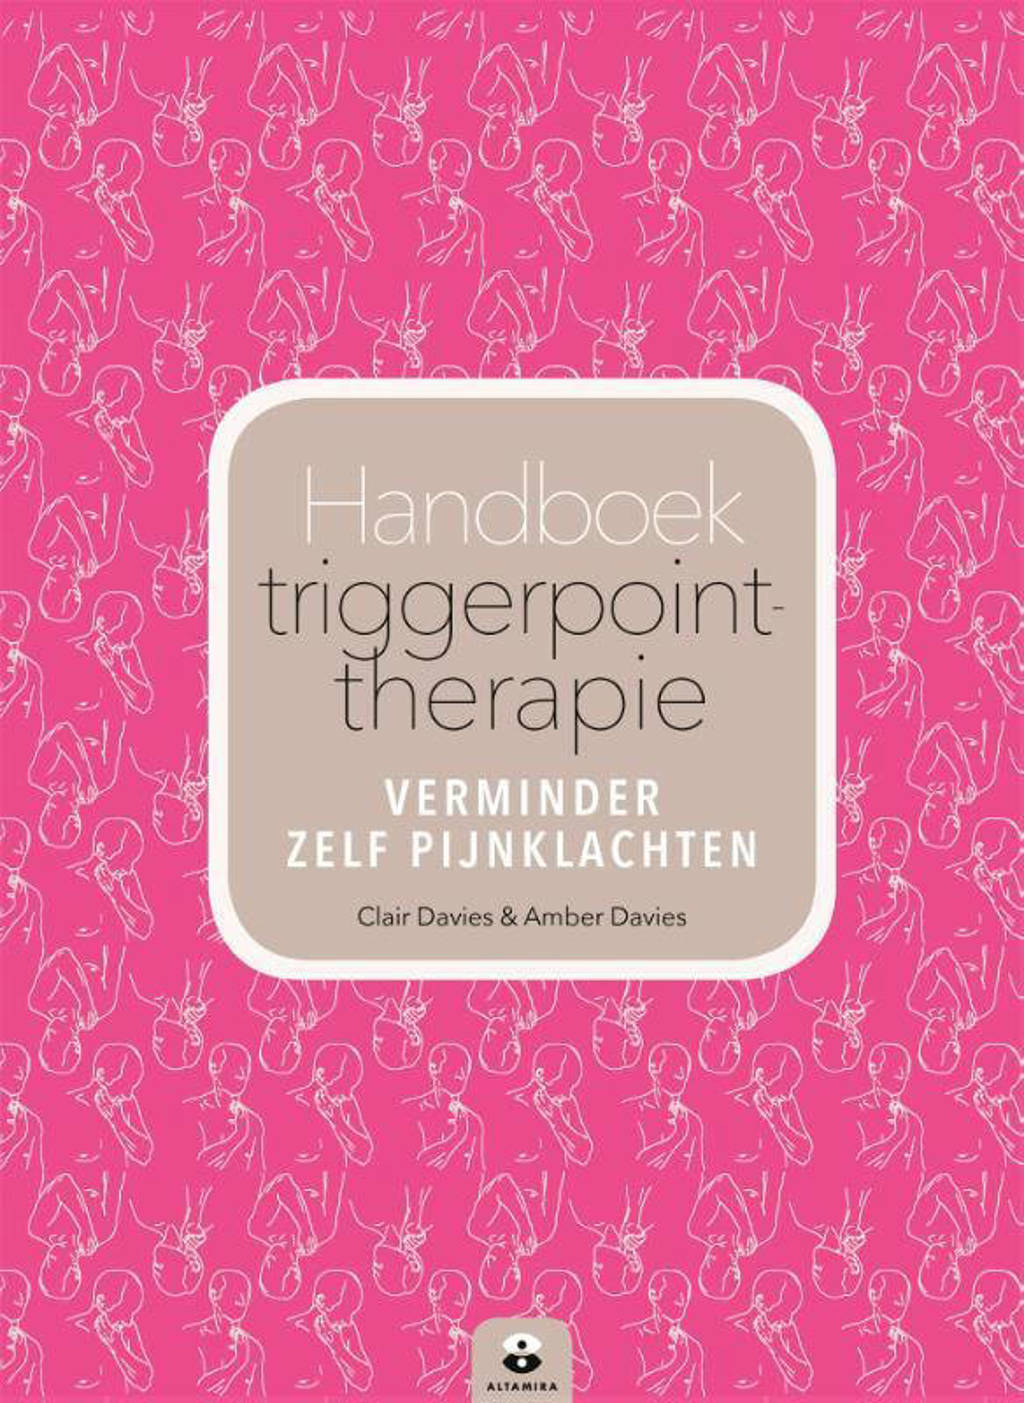 Handboek triggerpointtherapie - Clair Davies, Amber Davies en Maria Worley